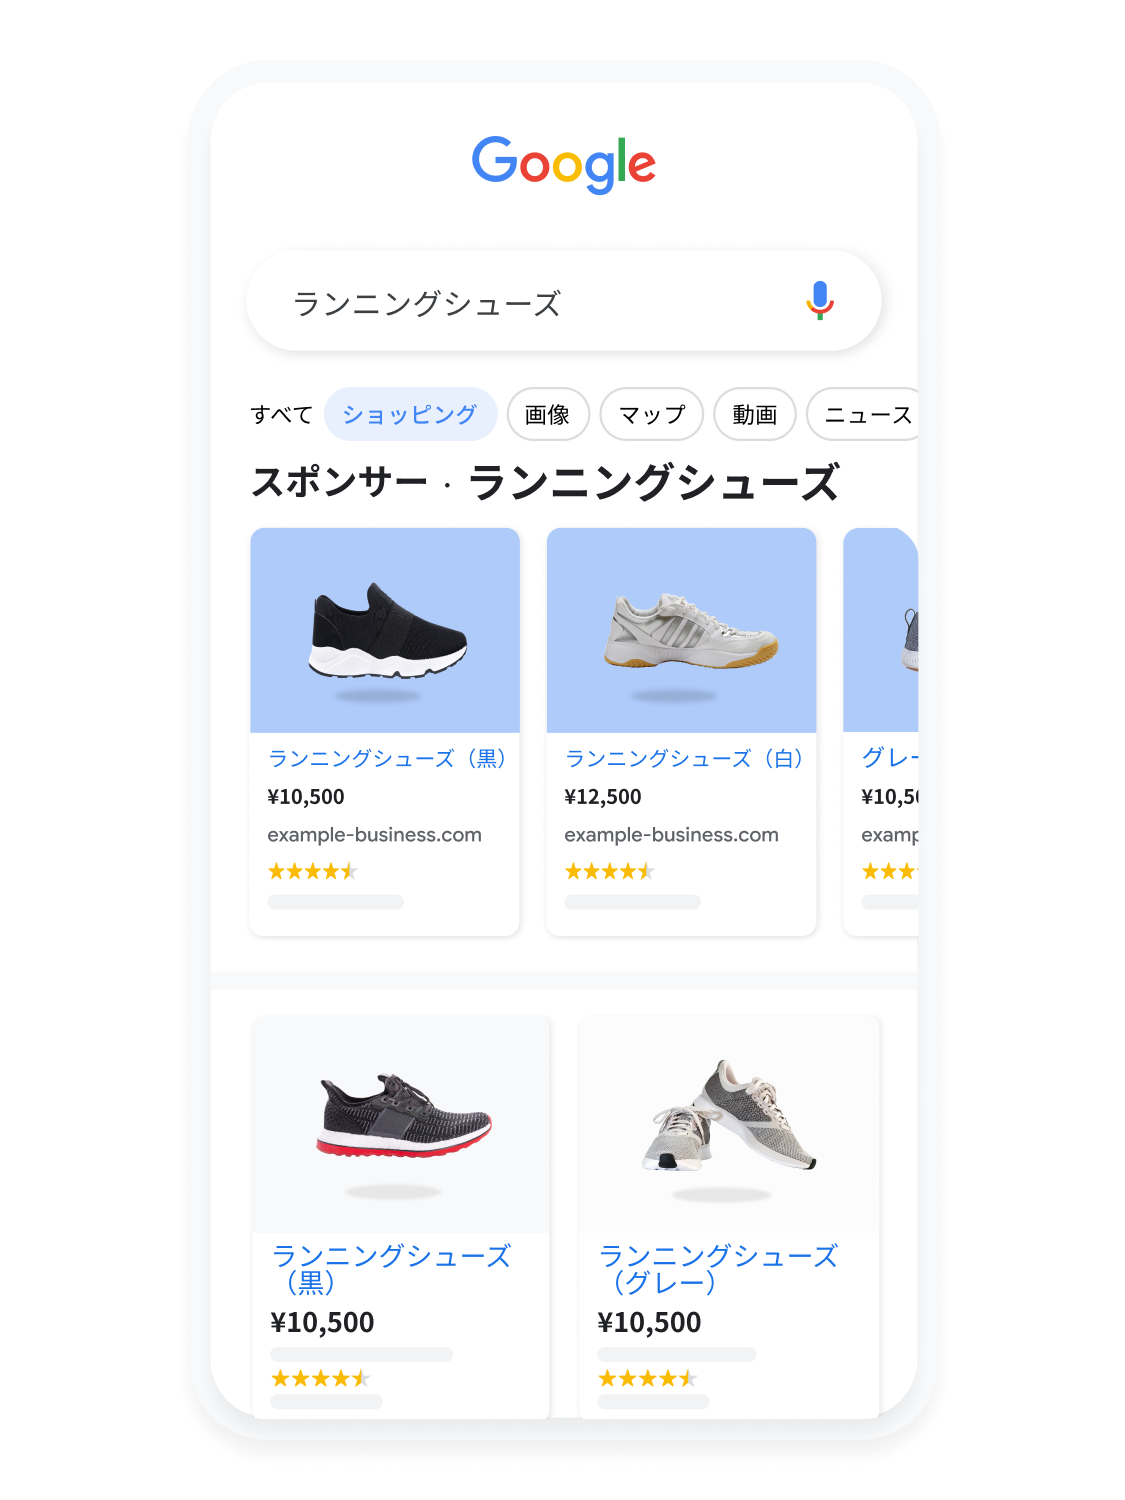 Google ショッピングでランニング シューズを検索する様子を示す、モバイル用ユーザー インターフェースのアニメーション。